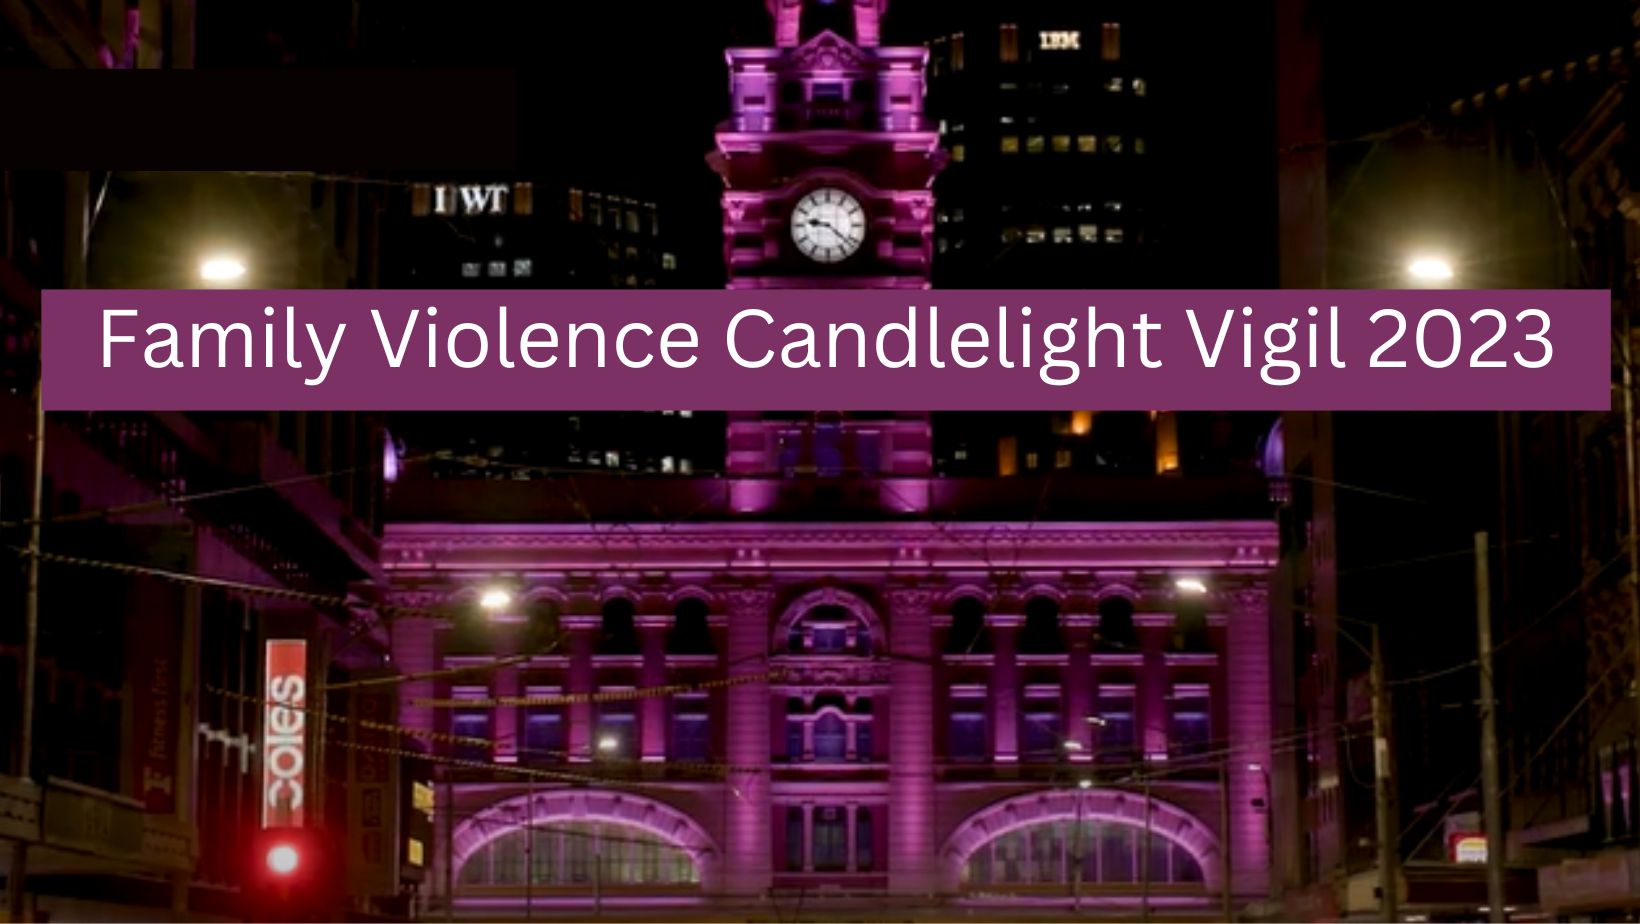 Family Violence Candlelight Vigil 2023 image